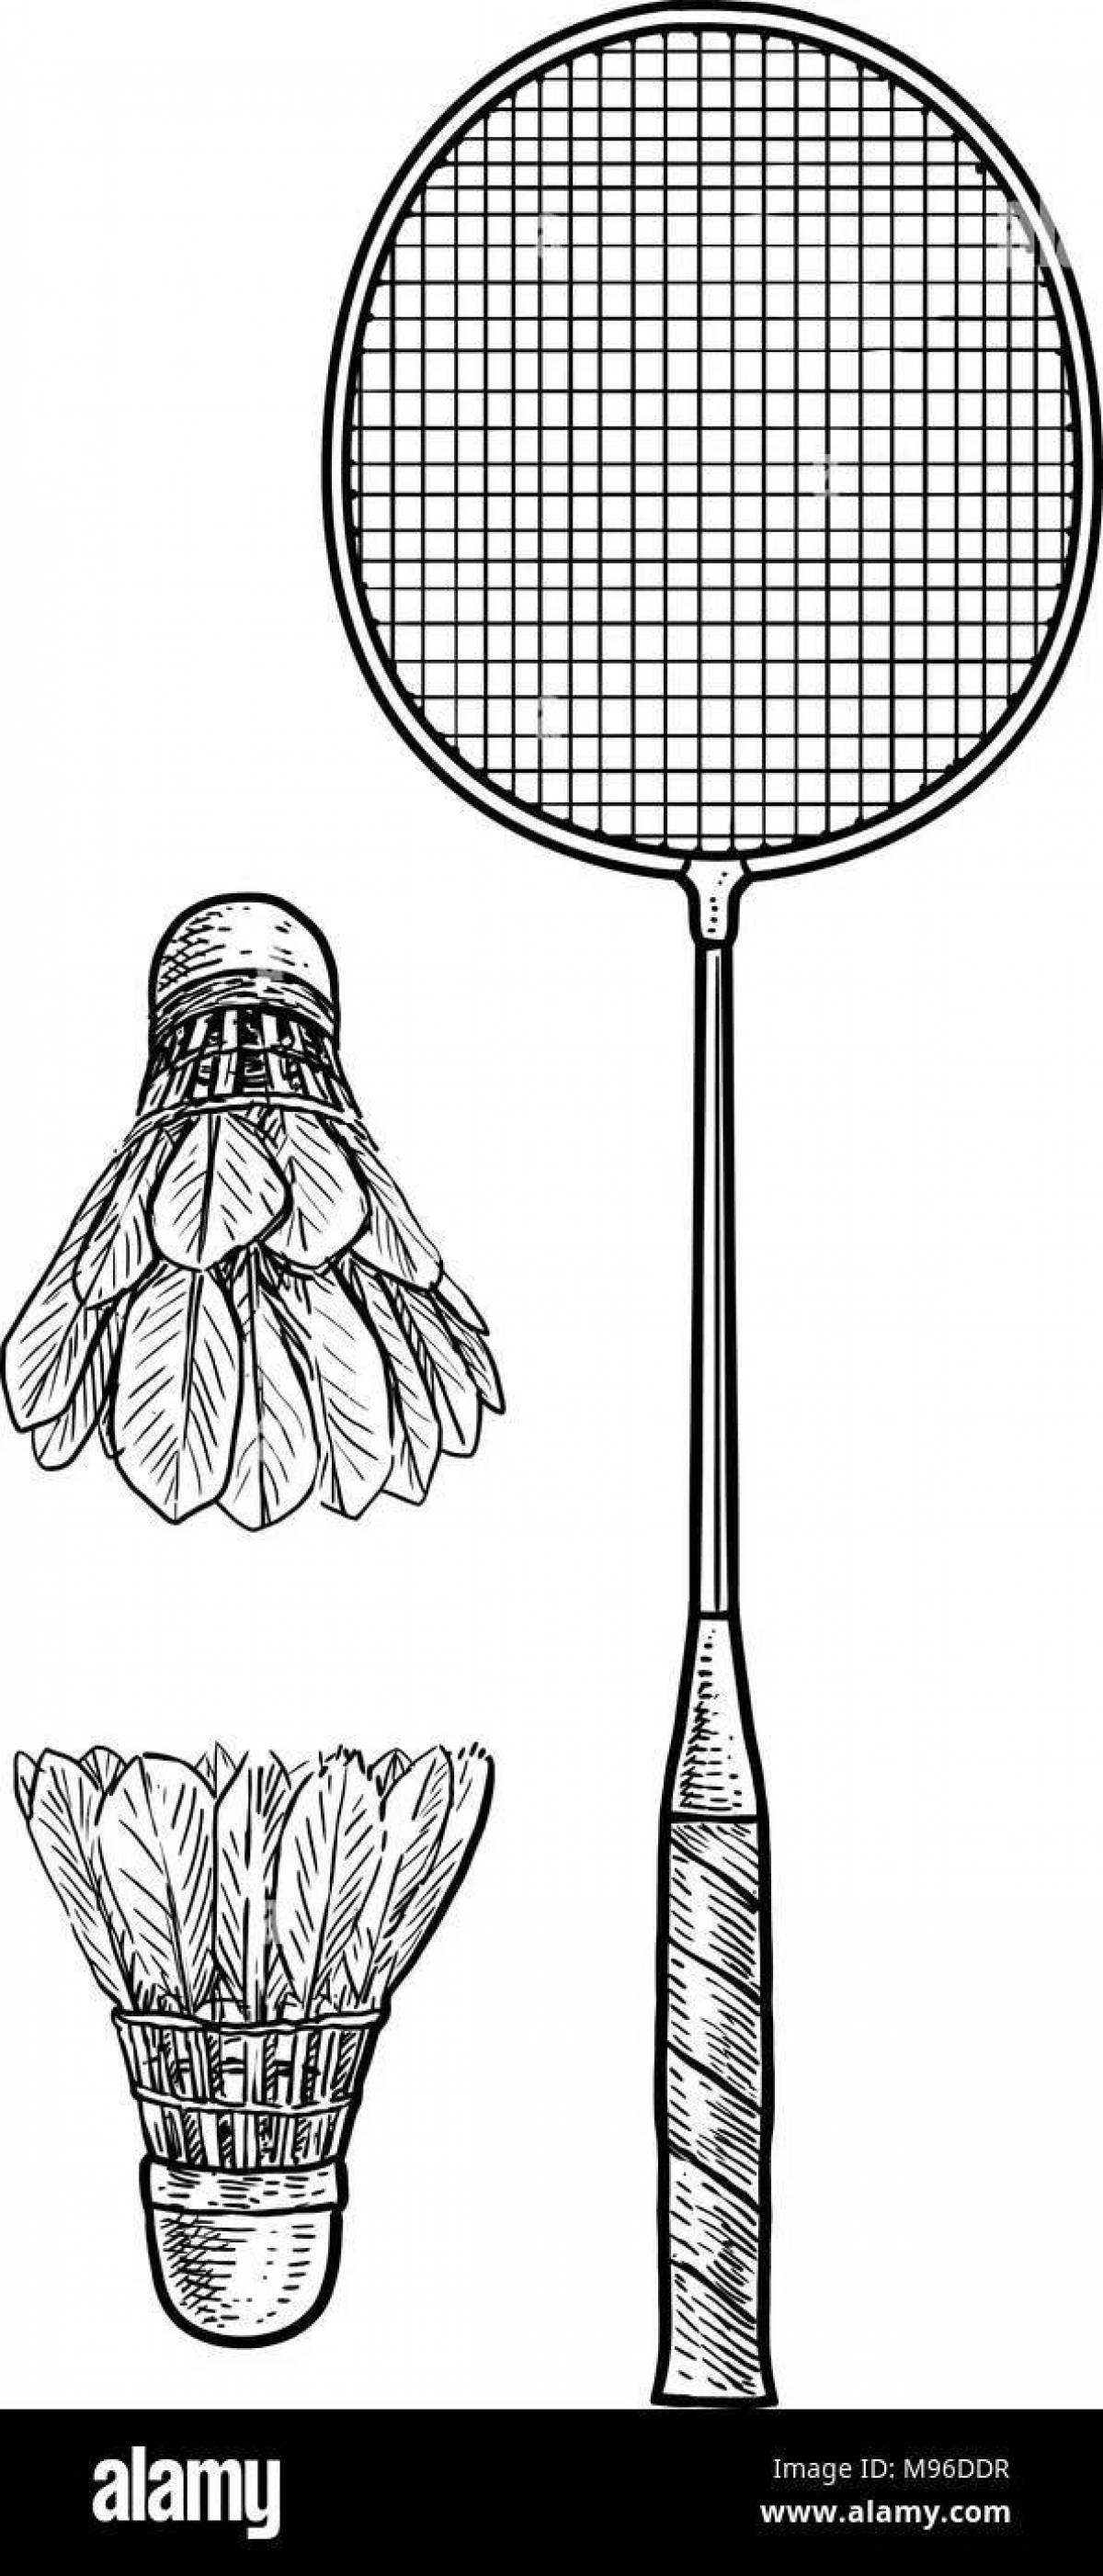 Creative badminton coloring book